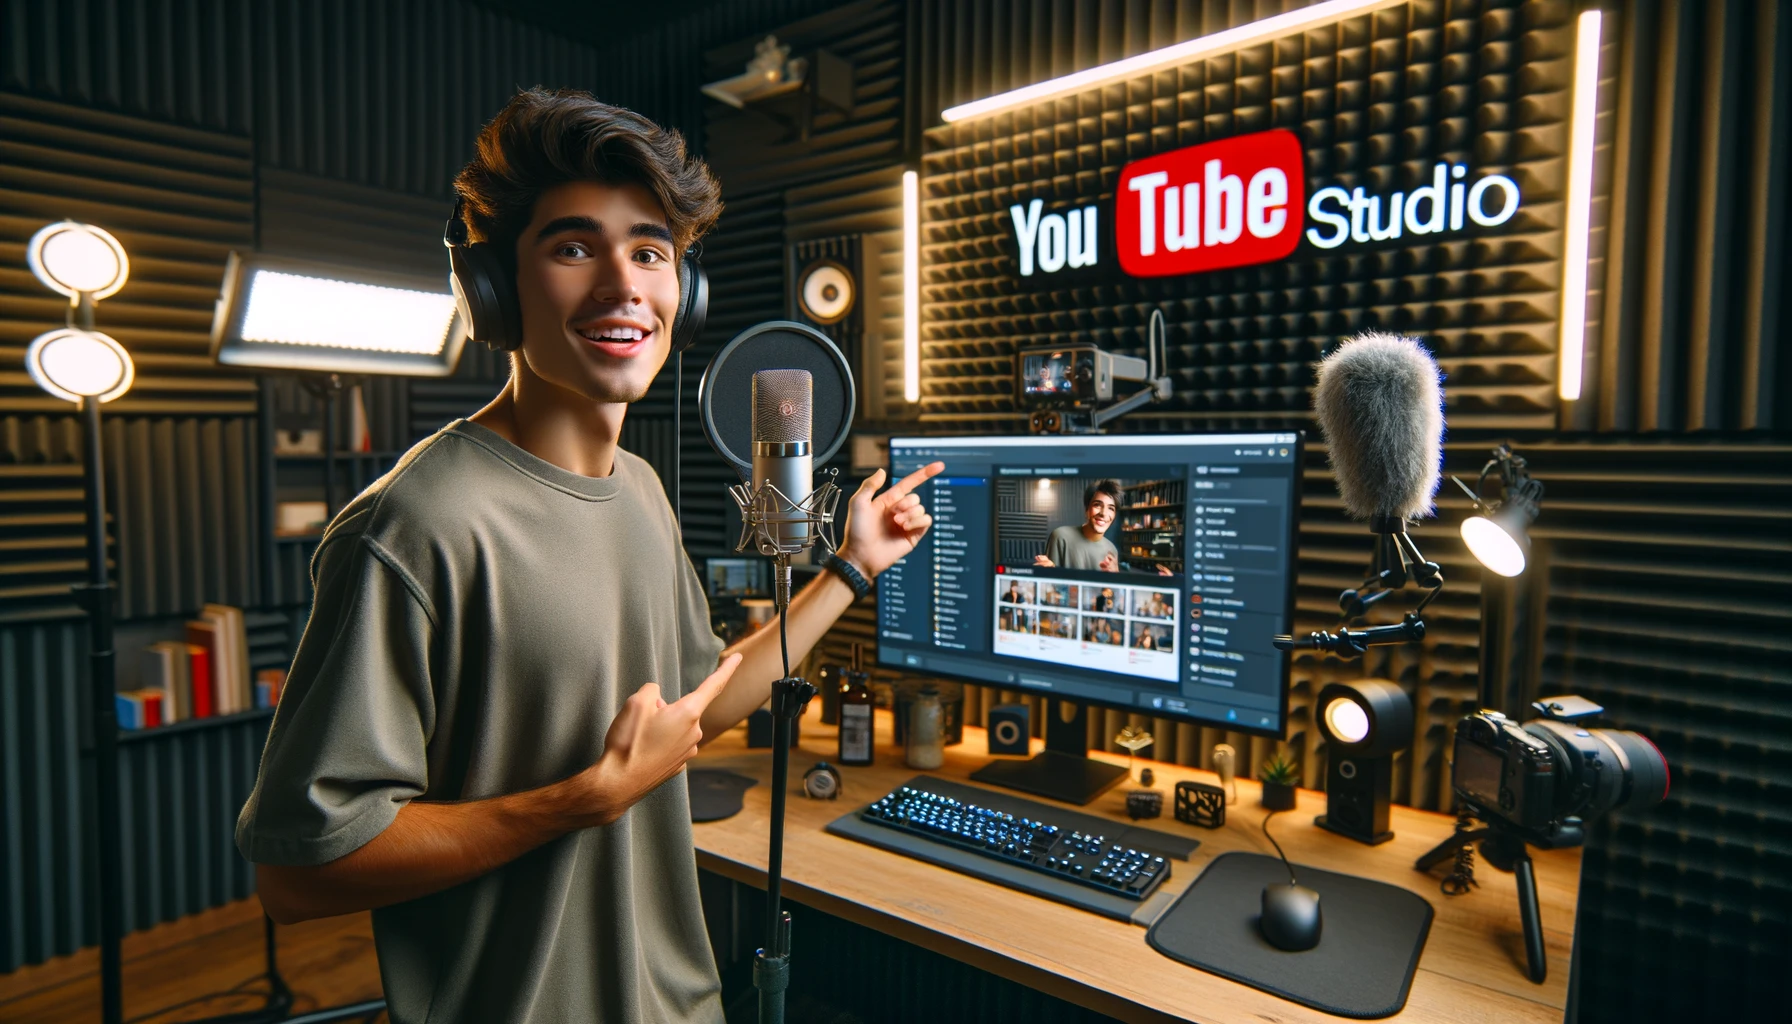 How To Use Youtube Studio?